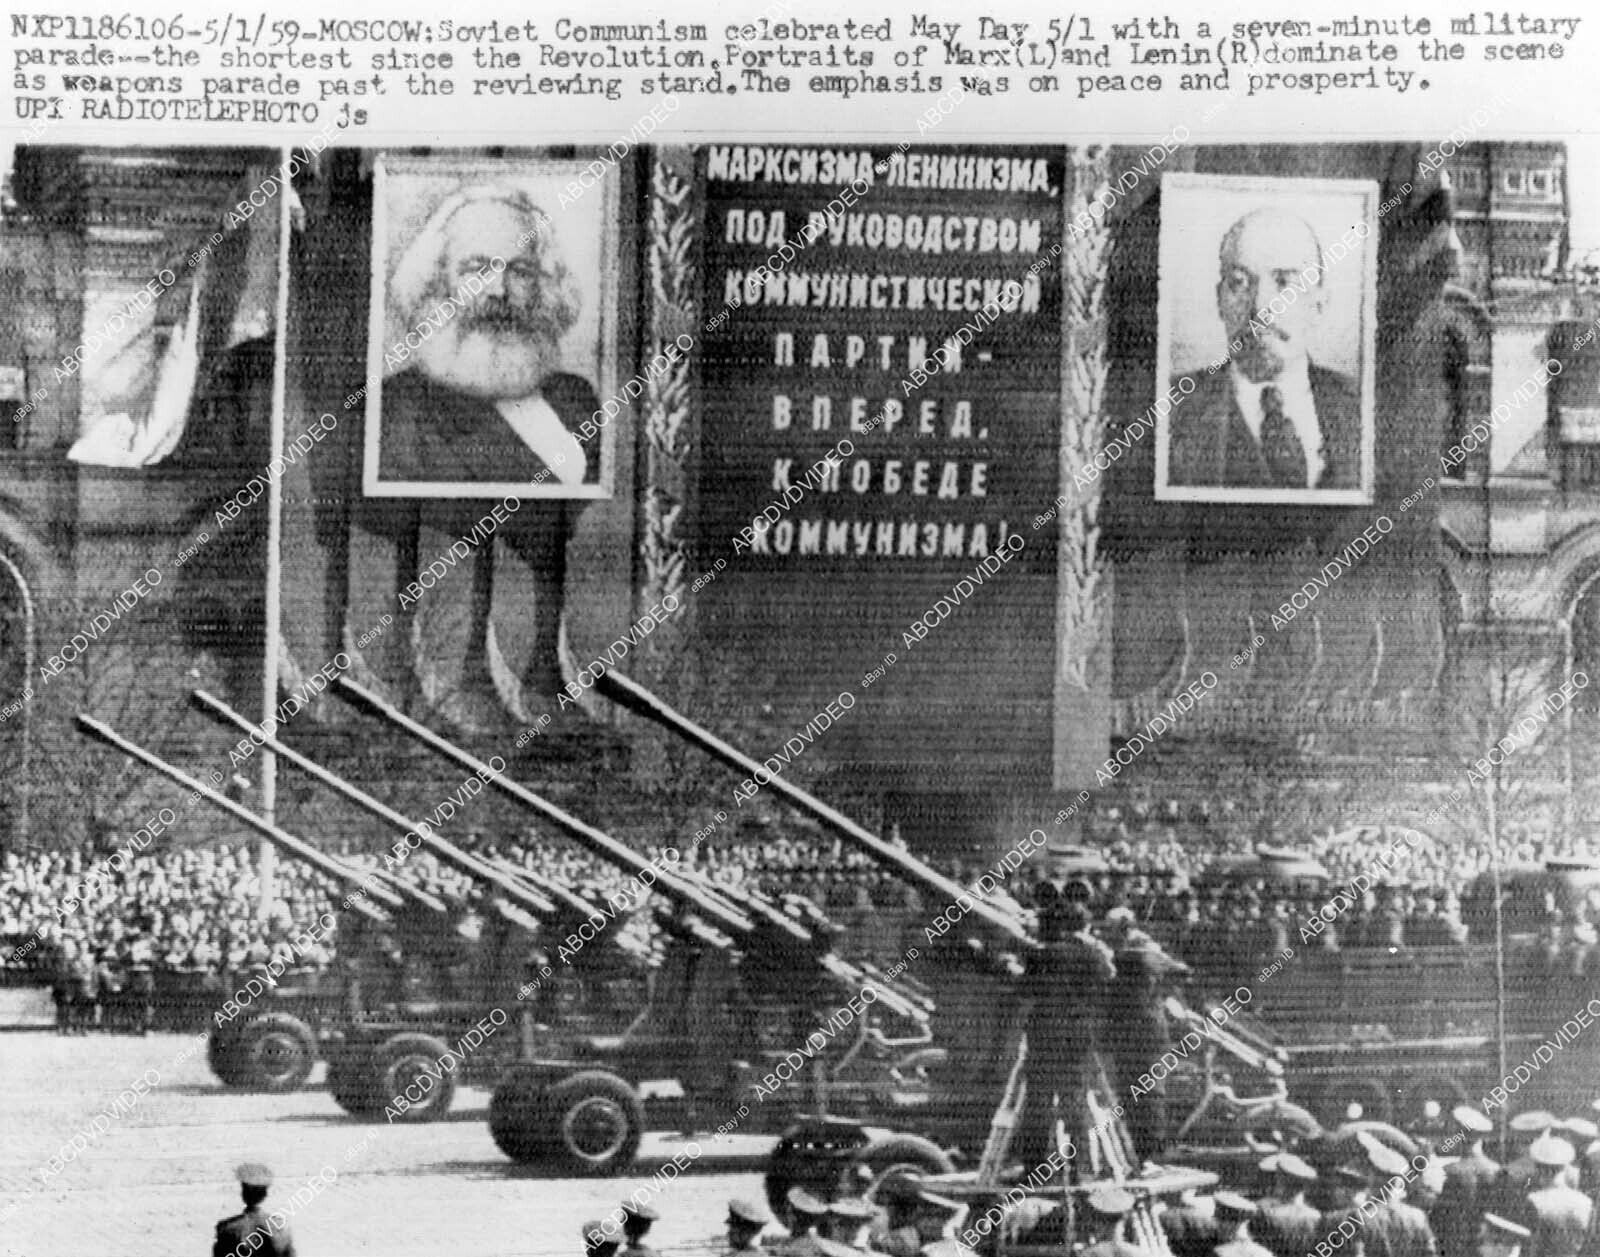 crp-67385 1959 politics Soviet Russia USSR military parade for Lenin & Marx crp-